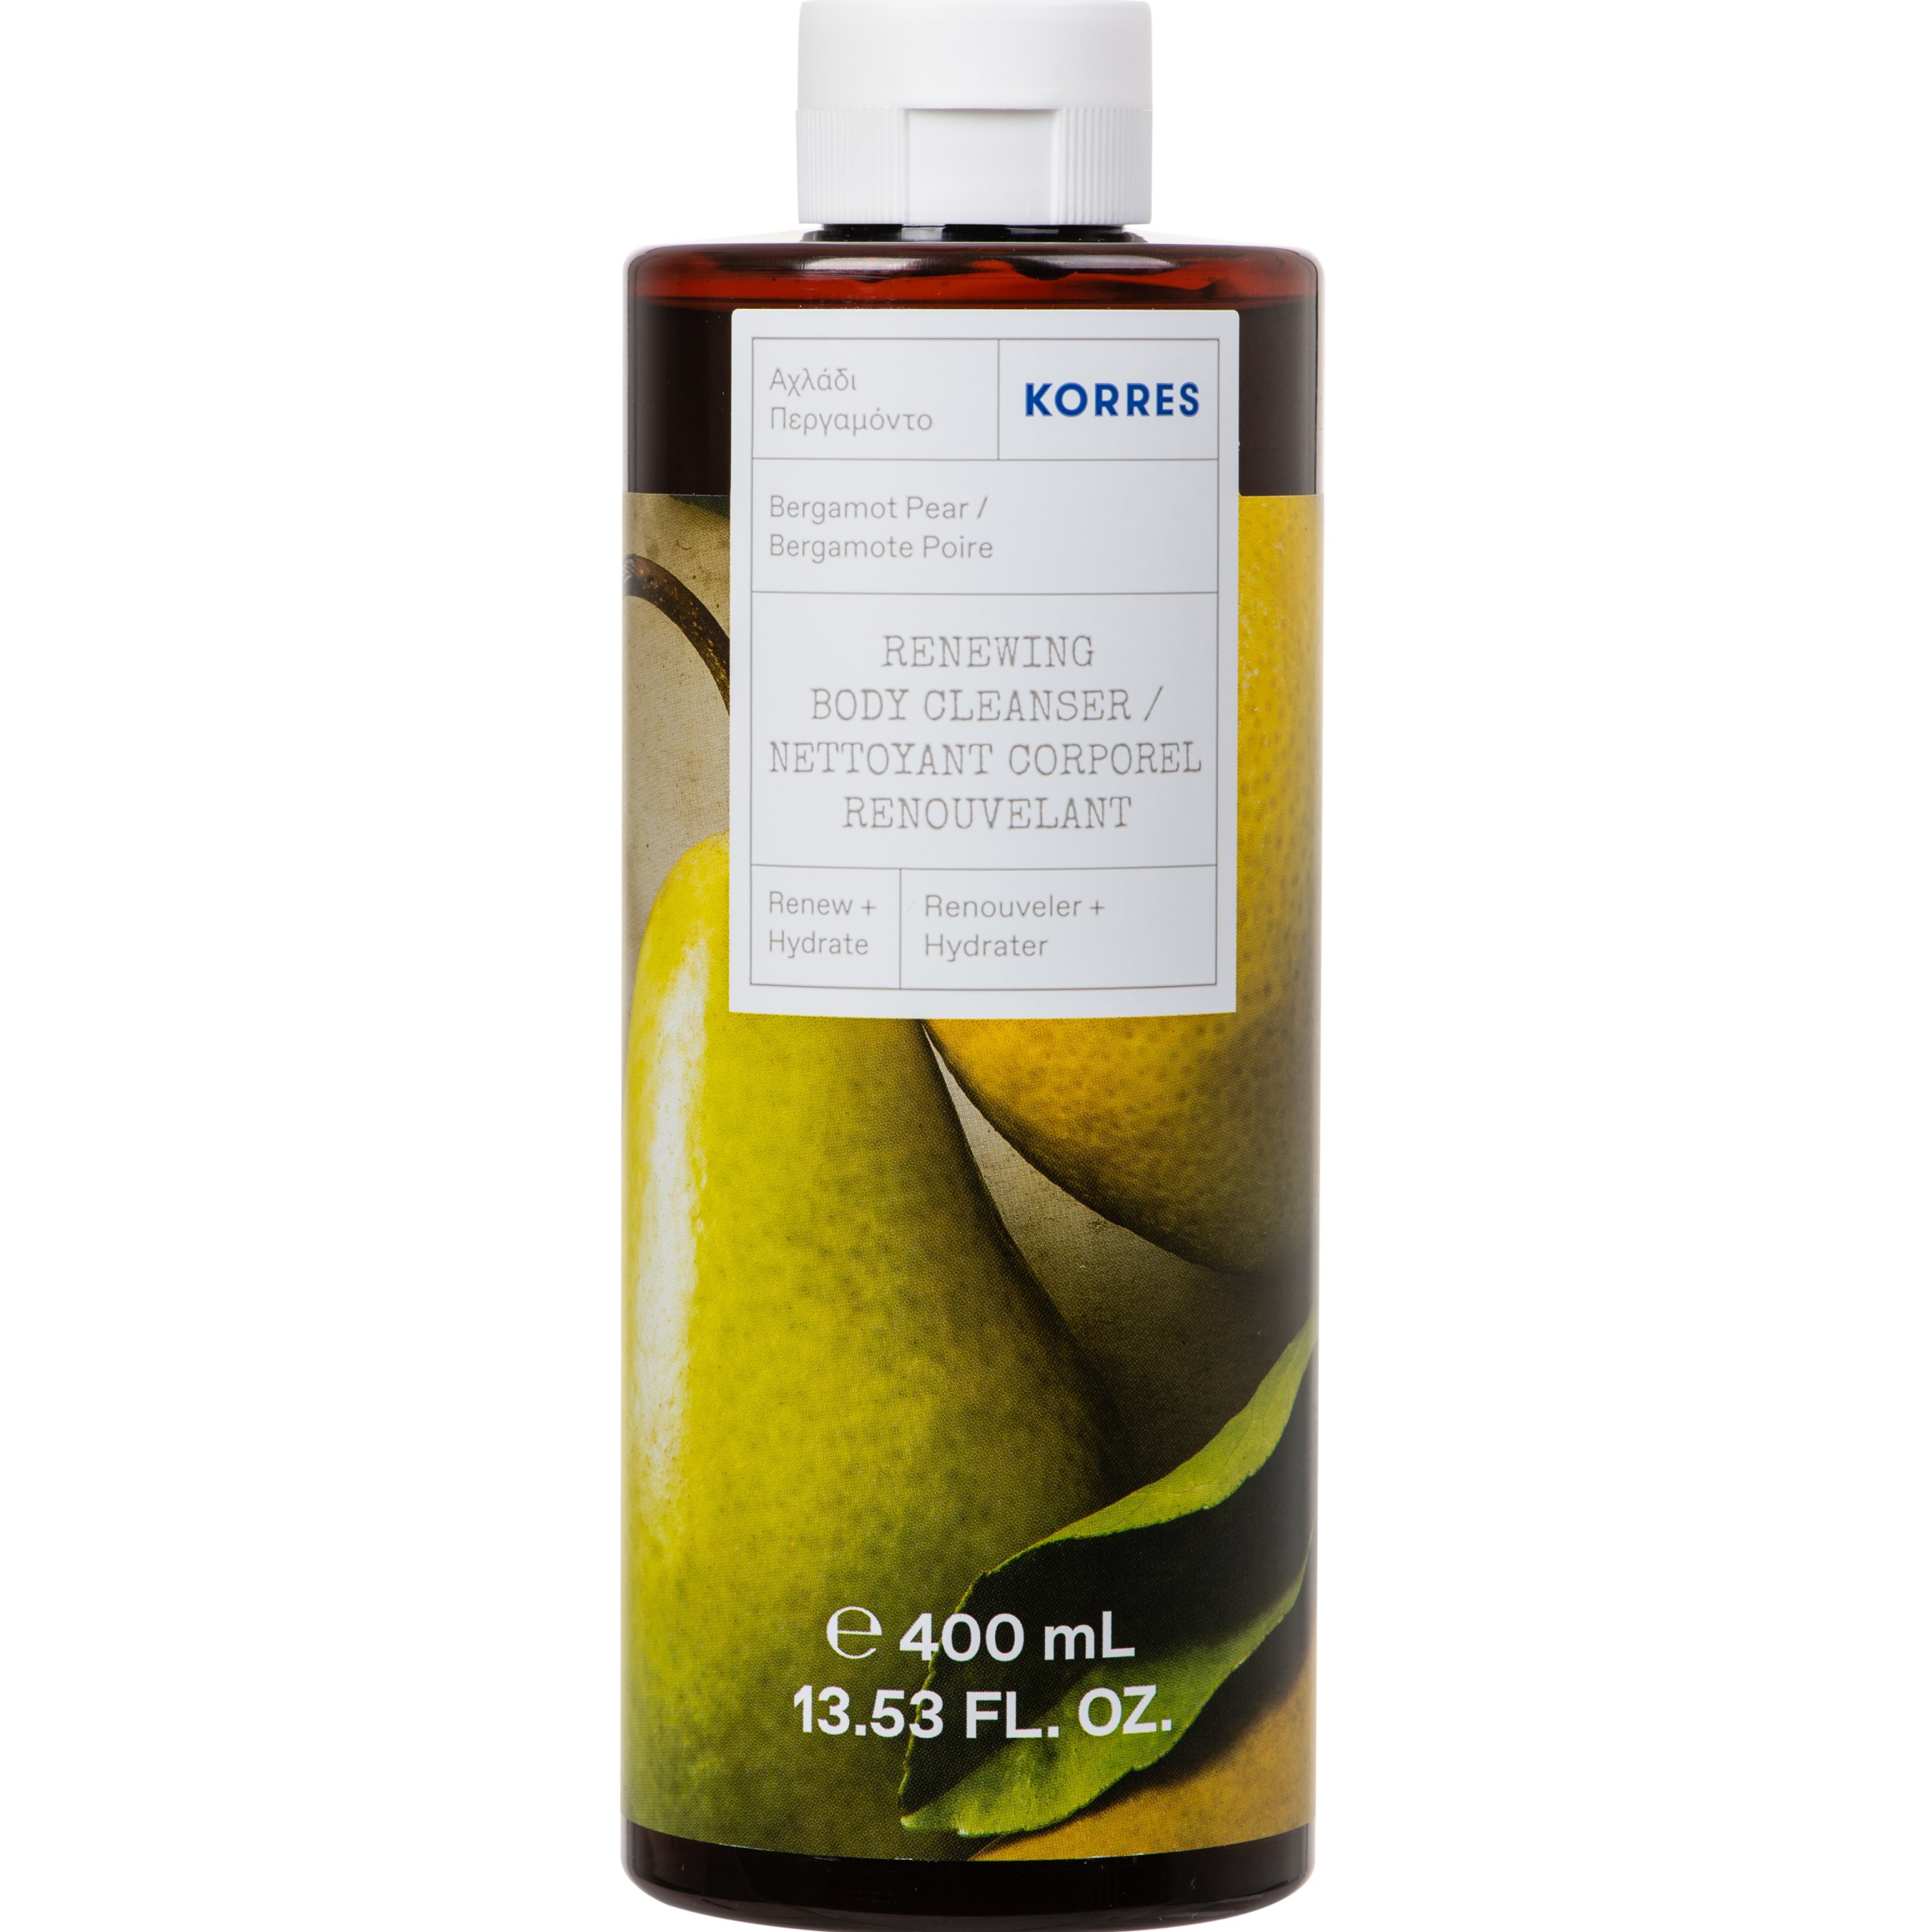 Korres Renewing Body Cleanser Bergamot Pear Shower Gel Αναζωογονητικό, Ενυδατικό Αφρόλουτρο με Άρωμα Αχλάδι & Περγαμόντο 400ml